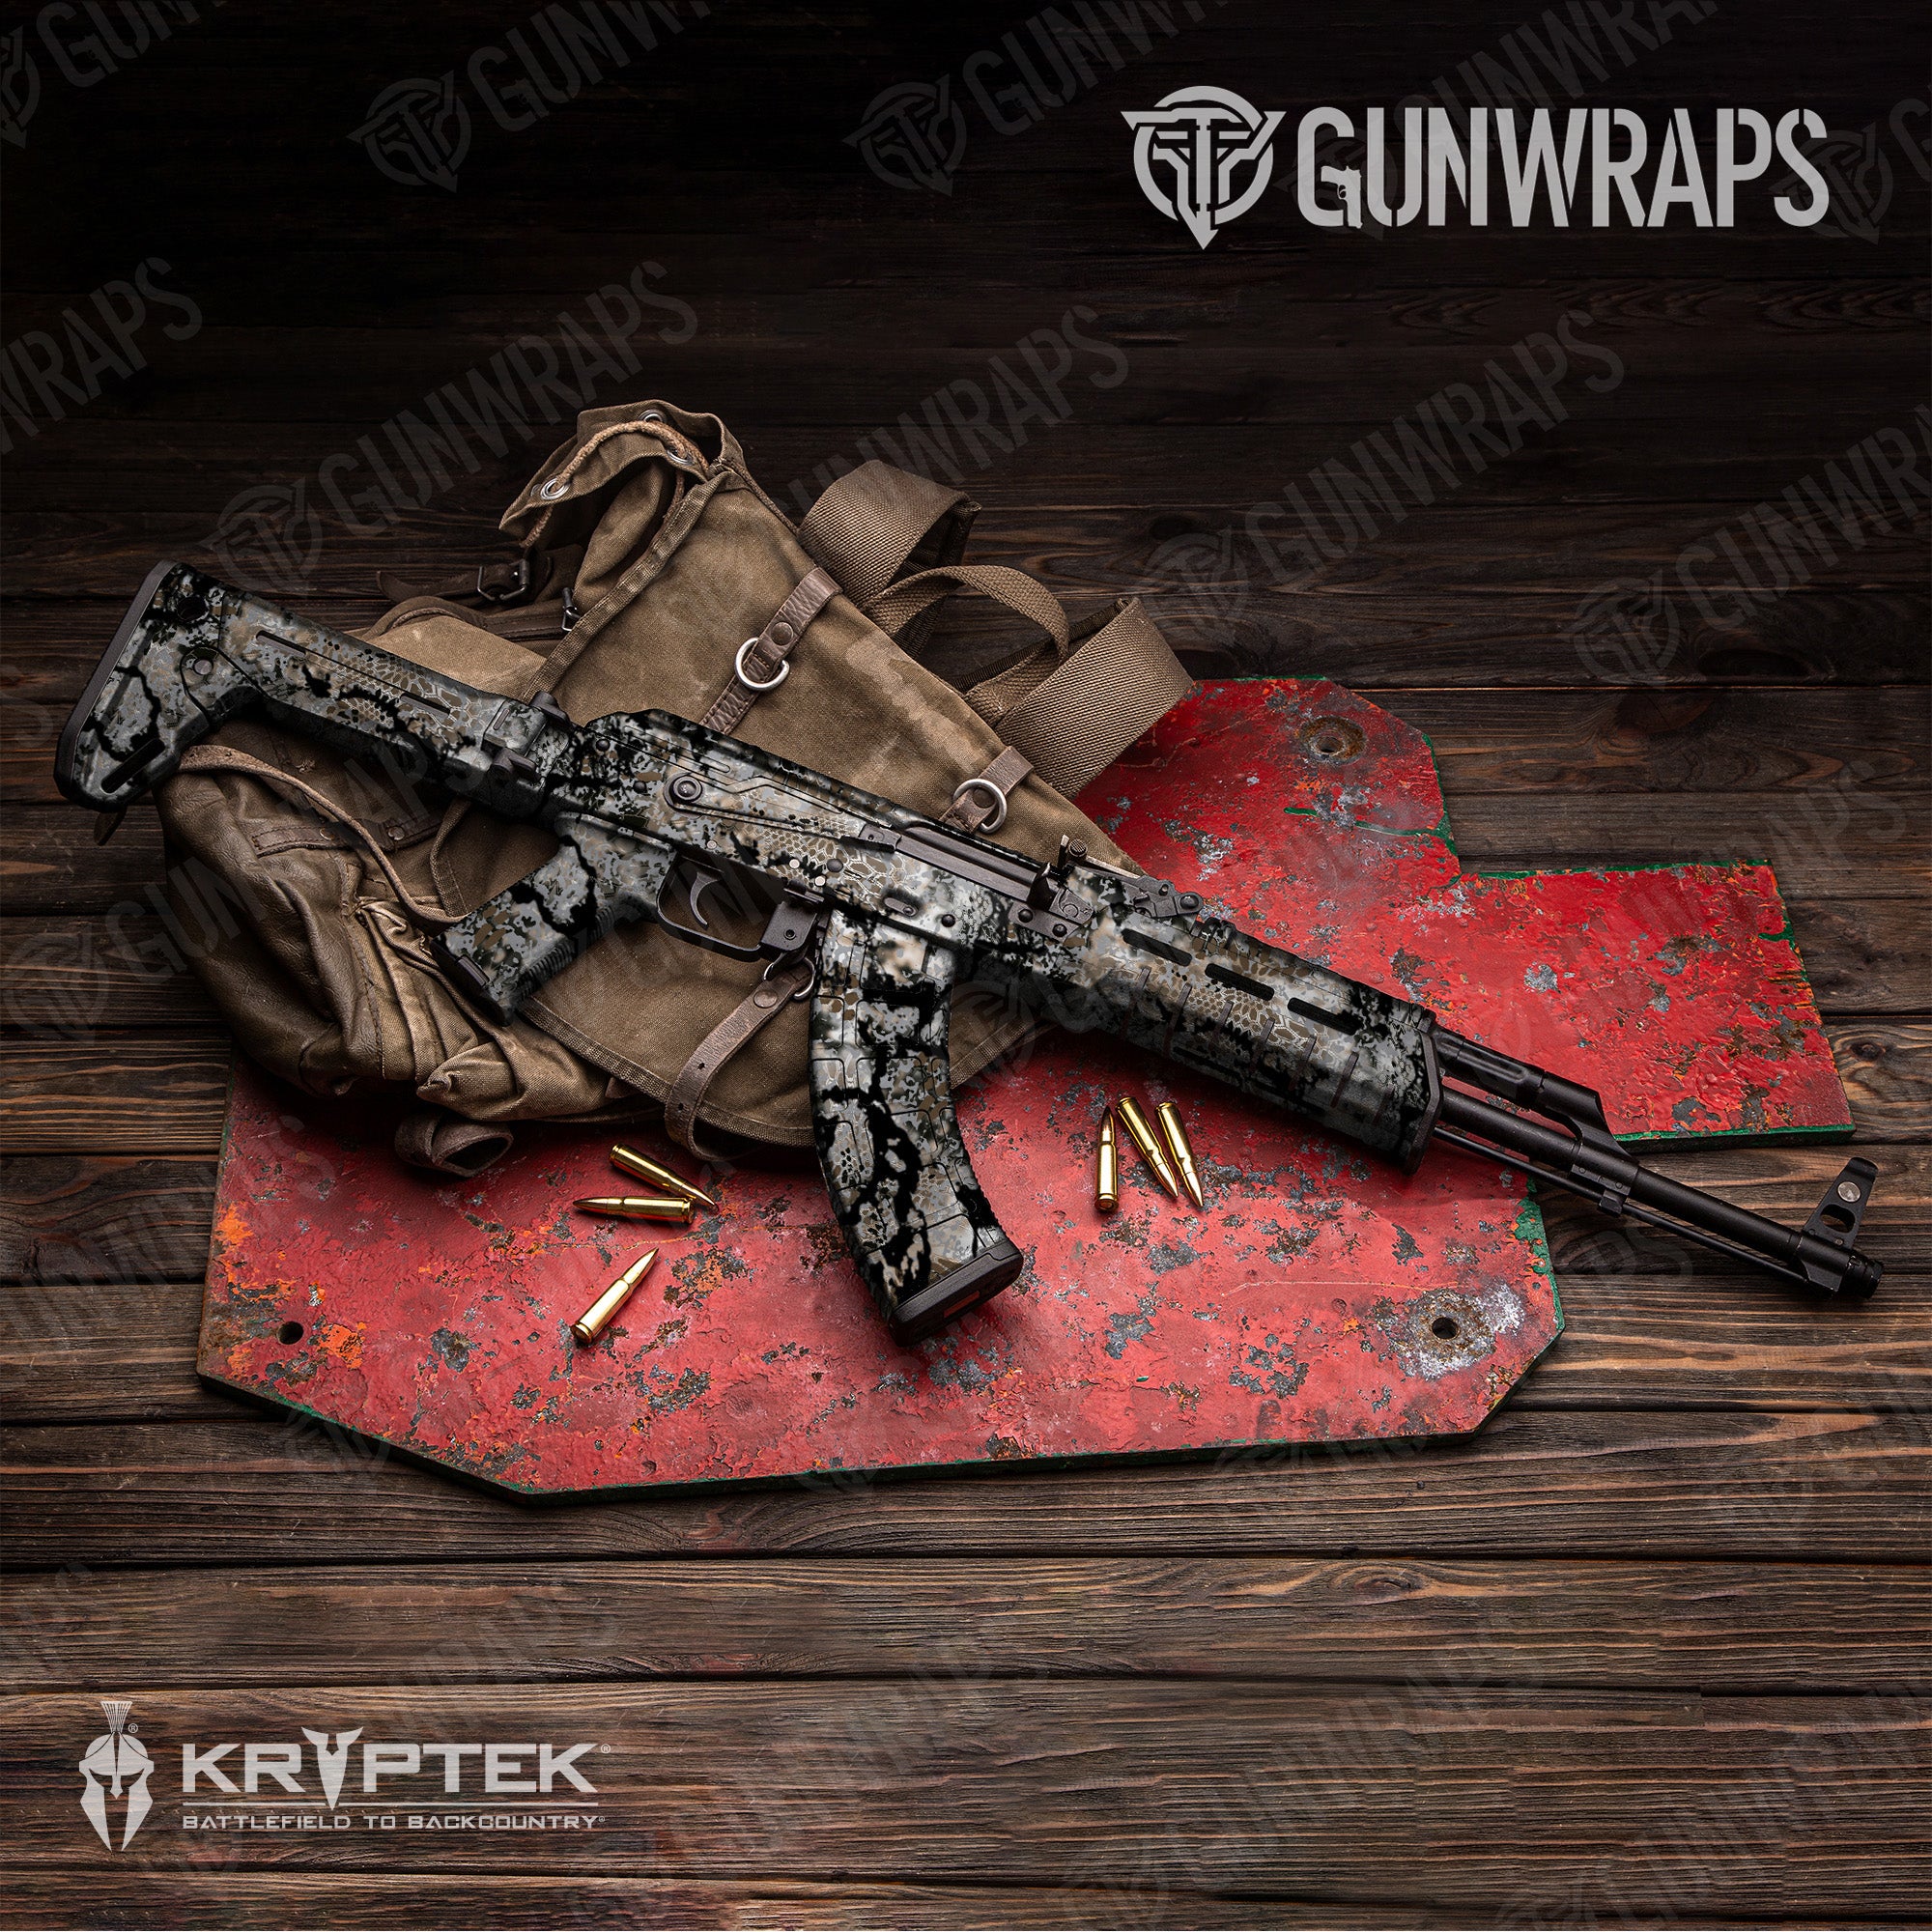 AK 47 Kryptek Obskura Skyfall Camo Gun Skin Vinyl Wrap